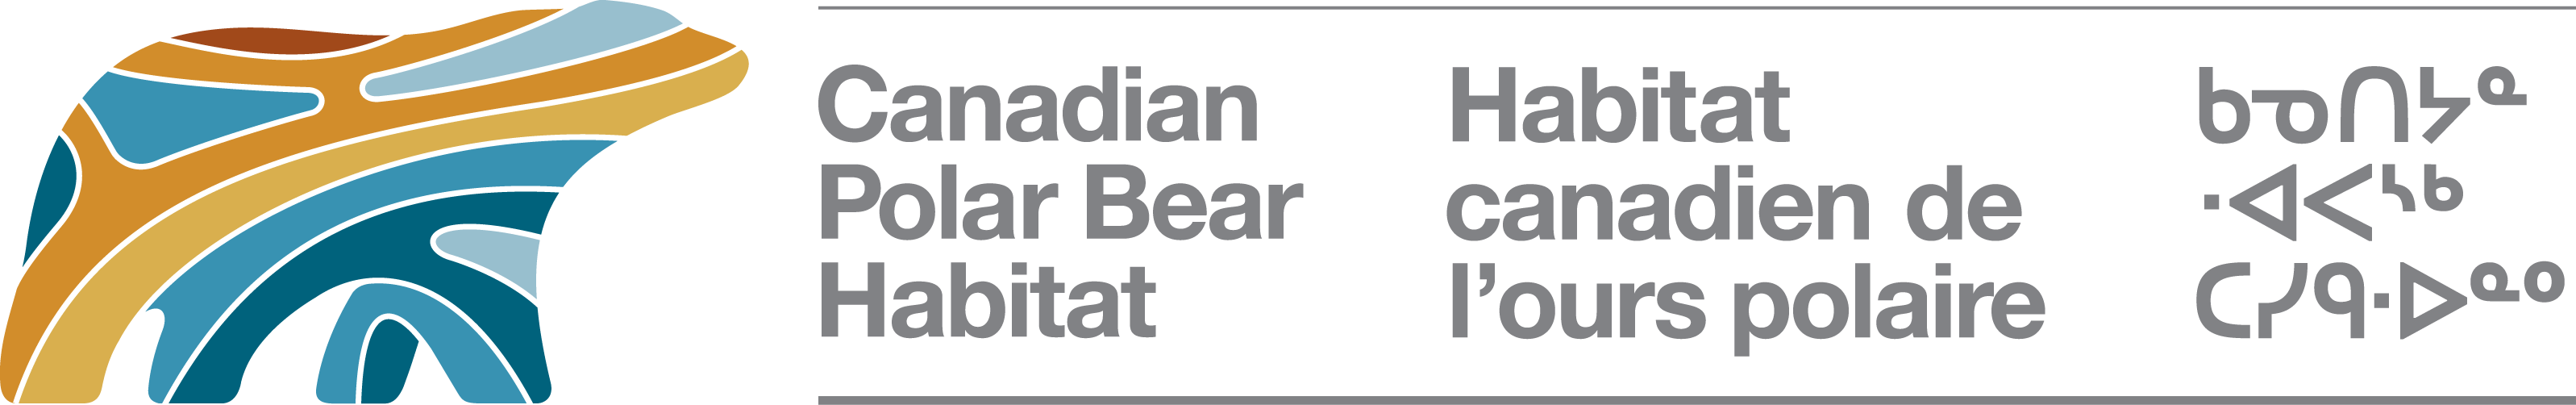 Canadian Polar Bear Habitat logo